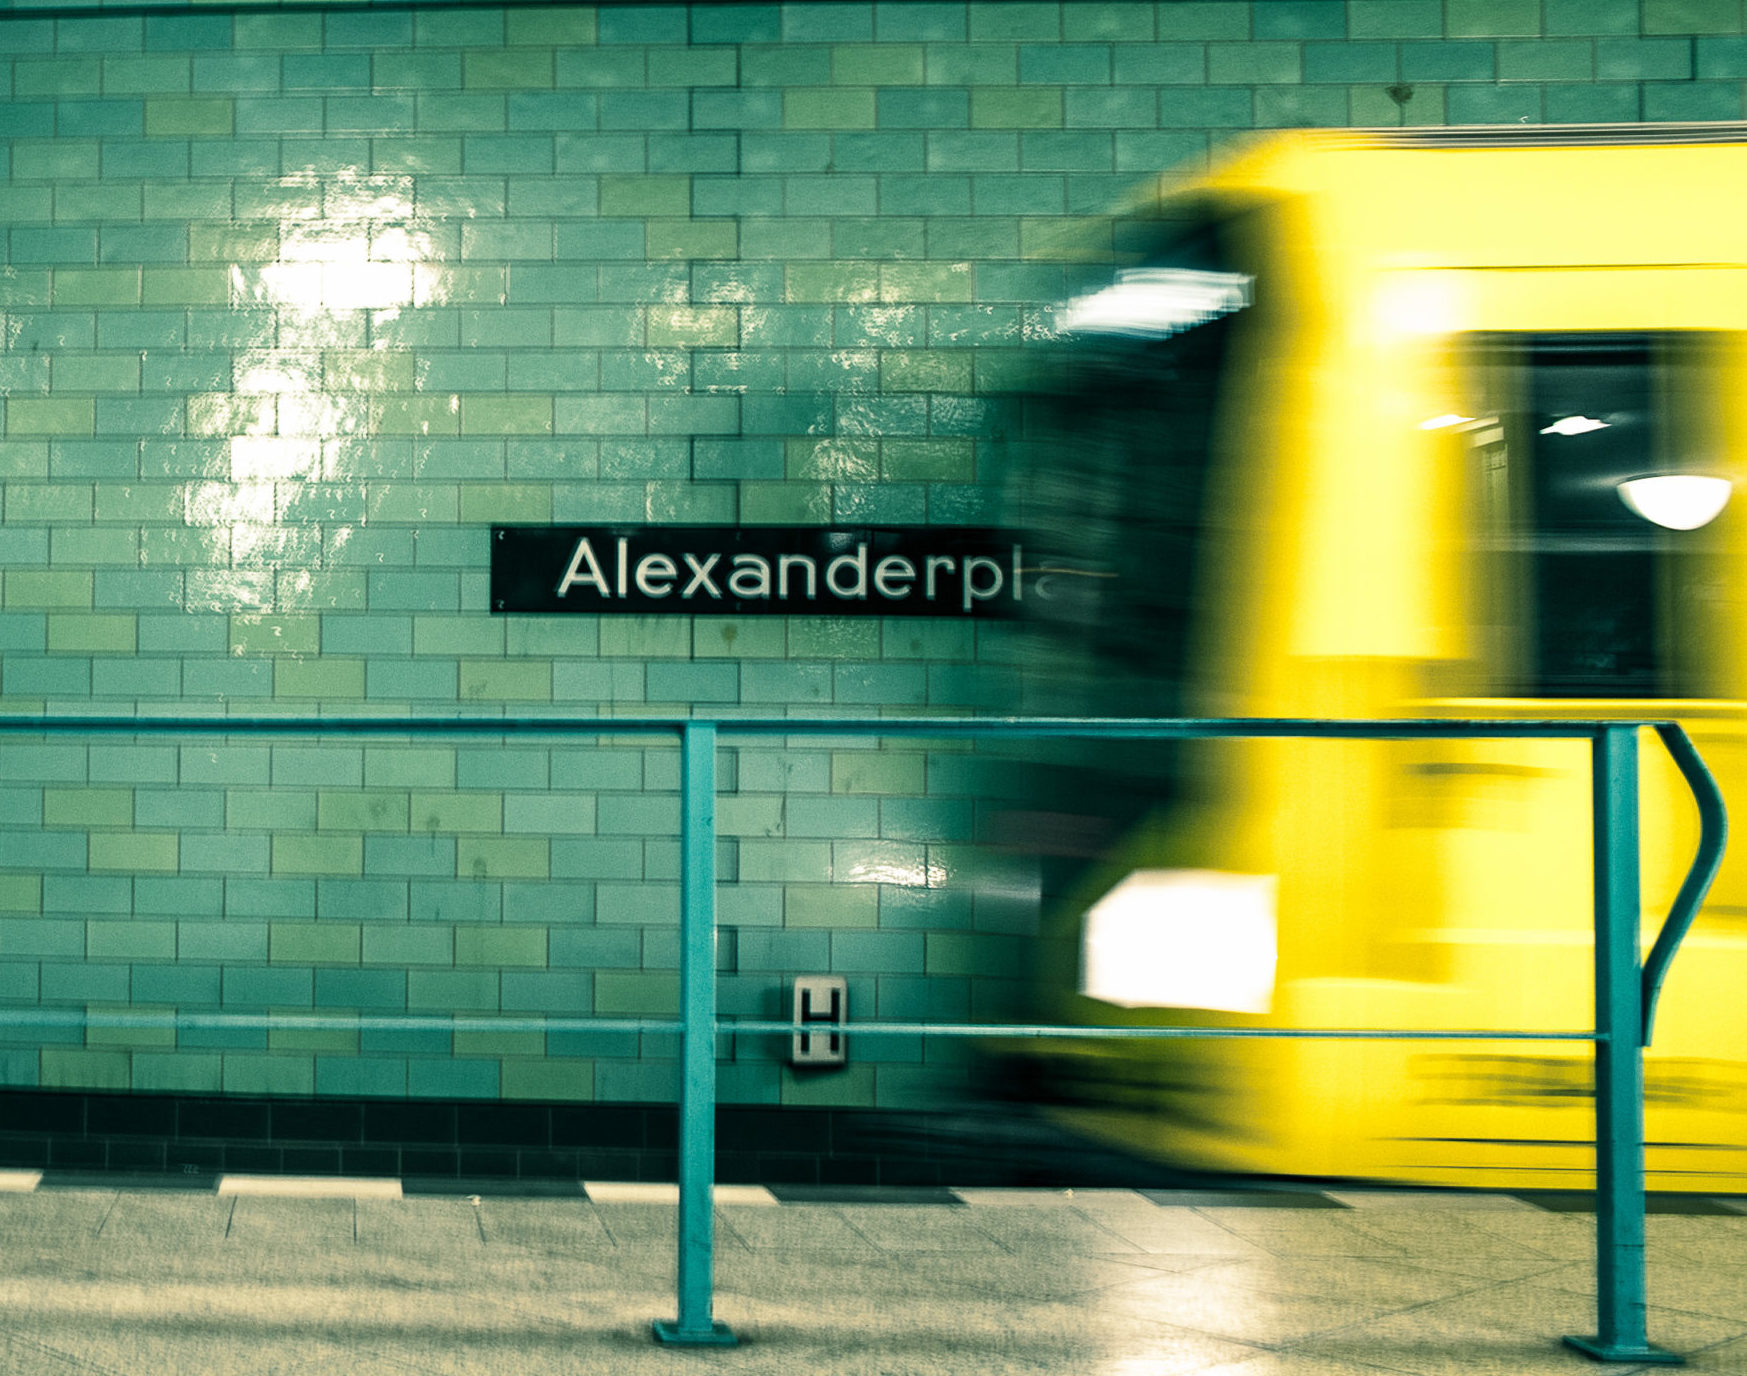 ©mixage Berlin métro